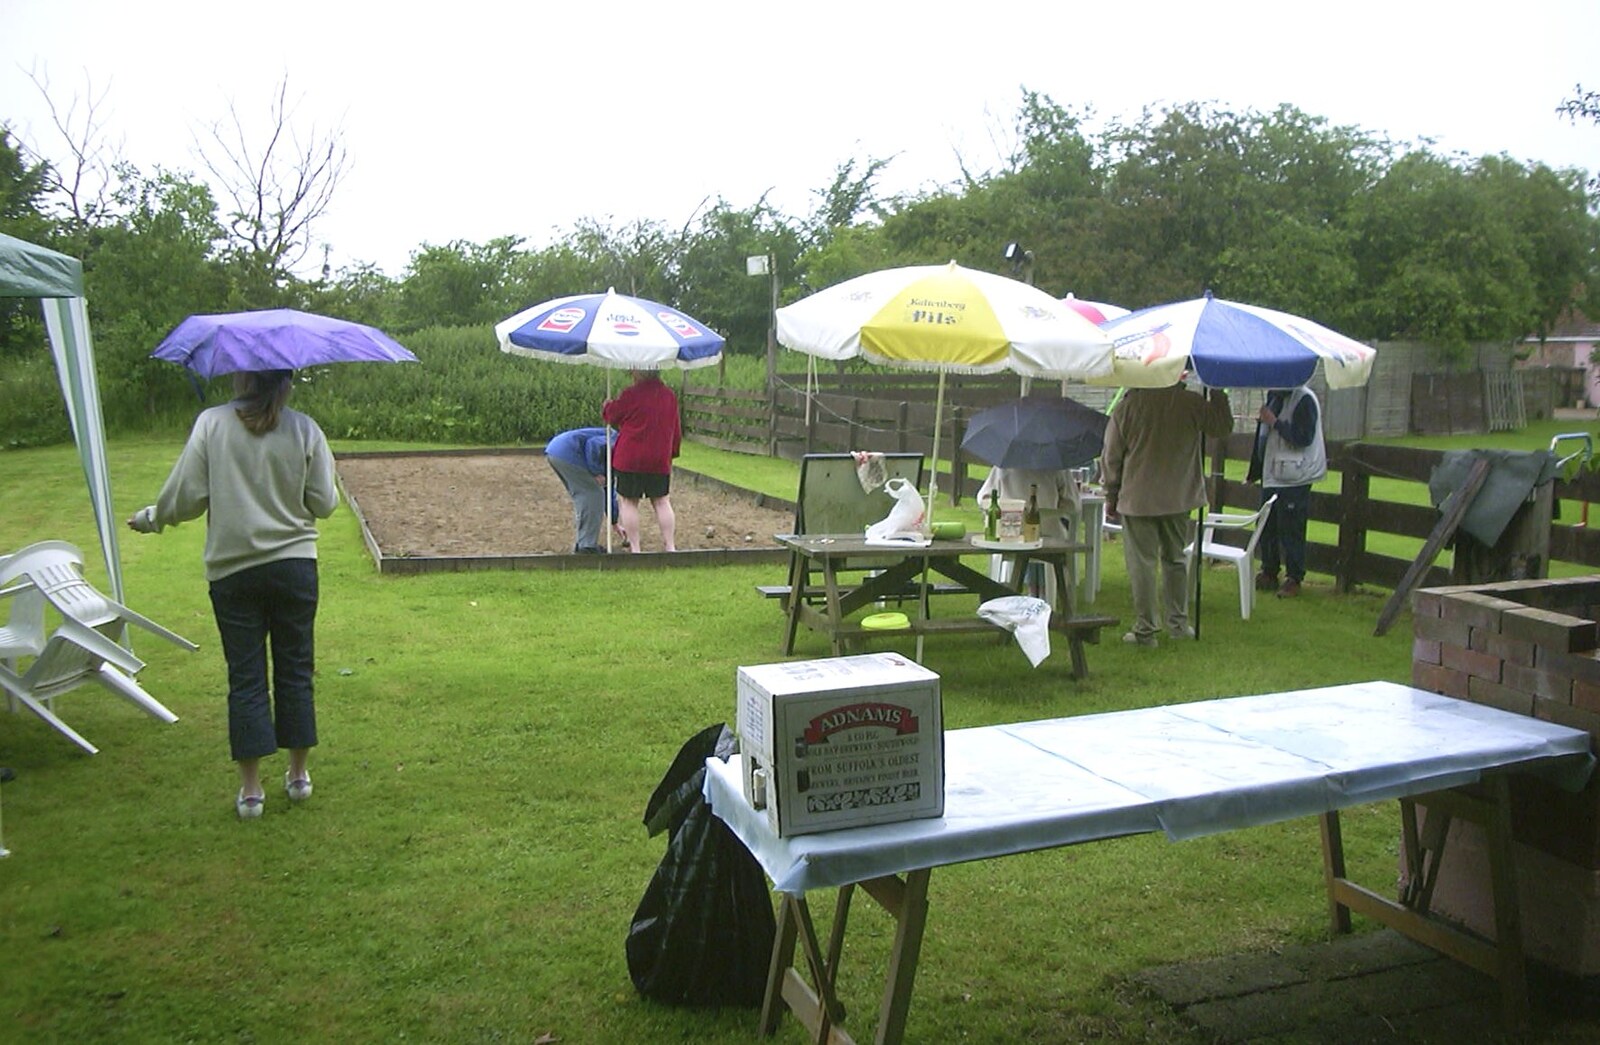 A Rainy Barbeque at the Swan Inn, Brome, Suffolk - 15th June 2002: Umbrellas everywhere